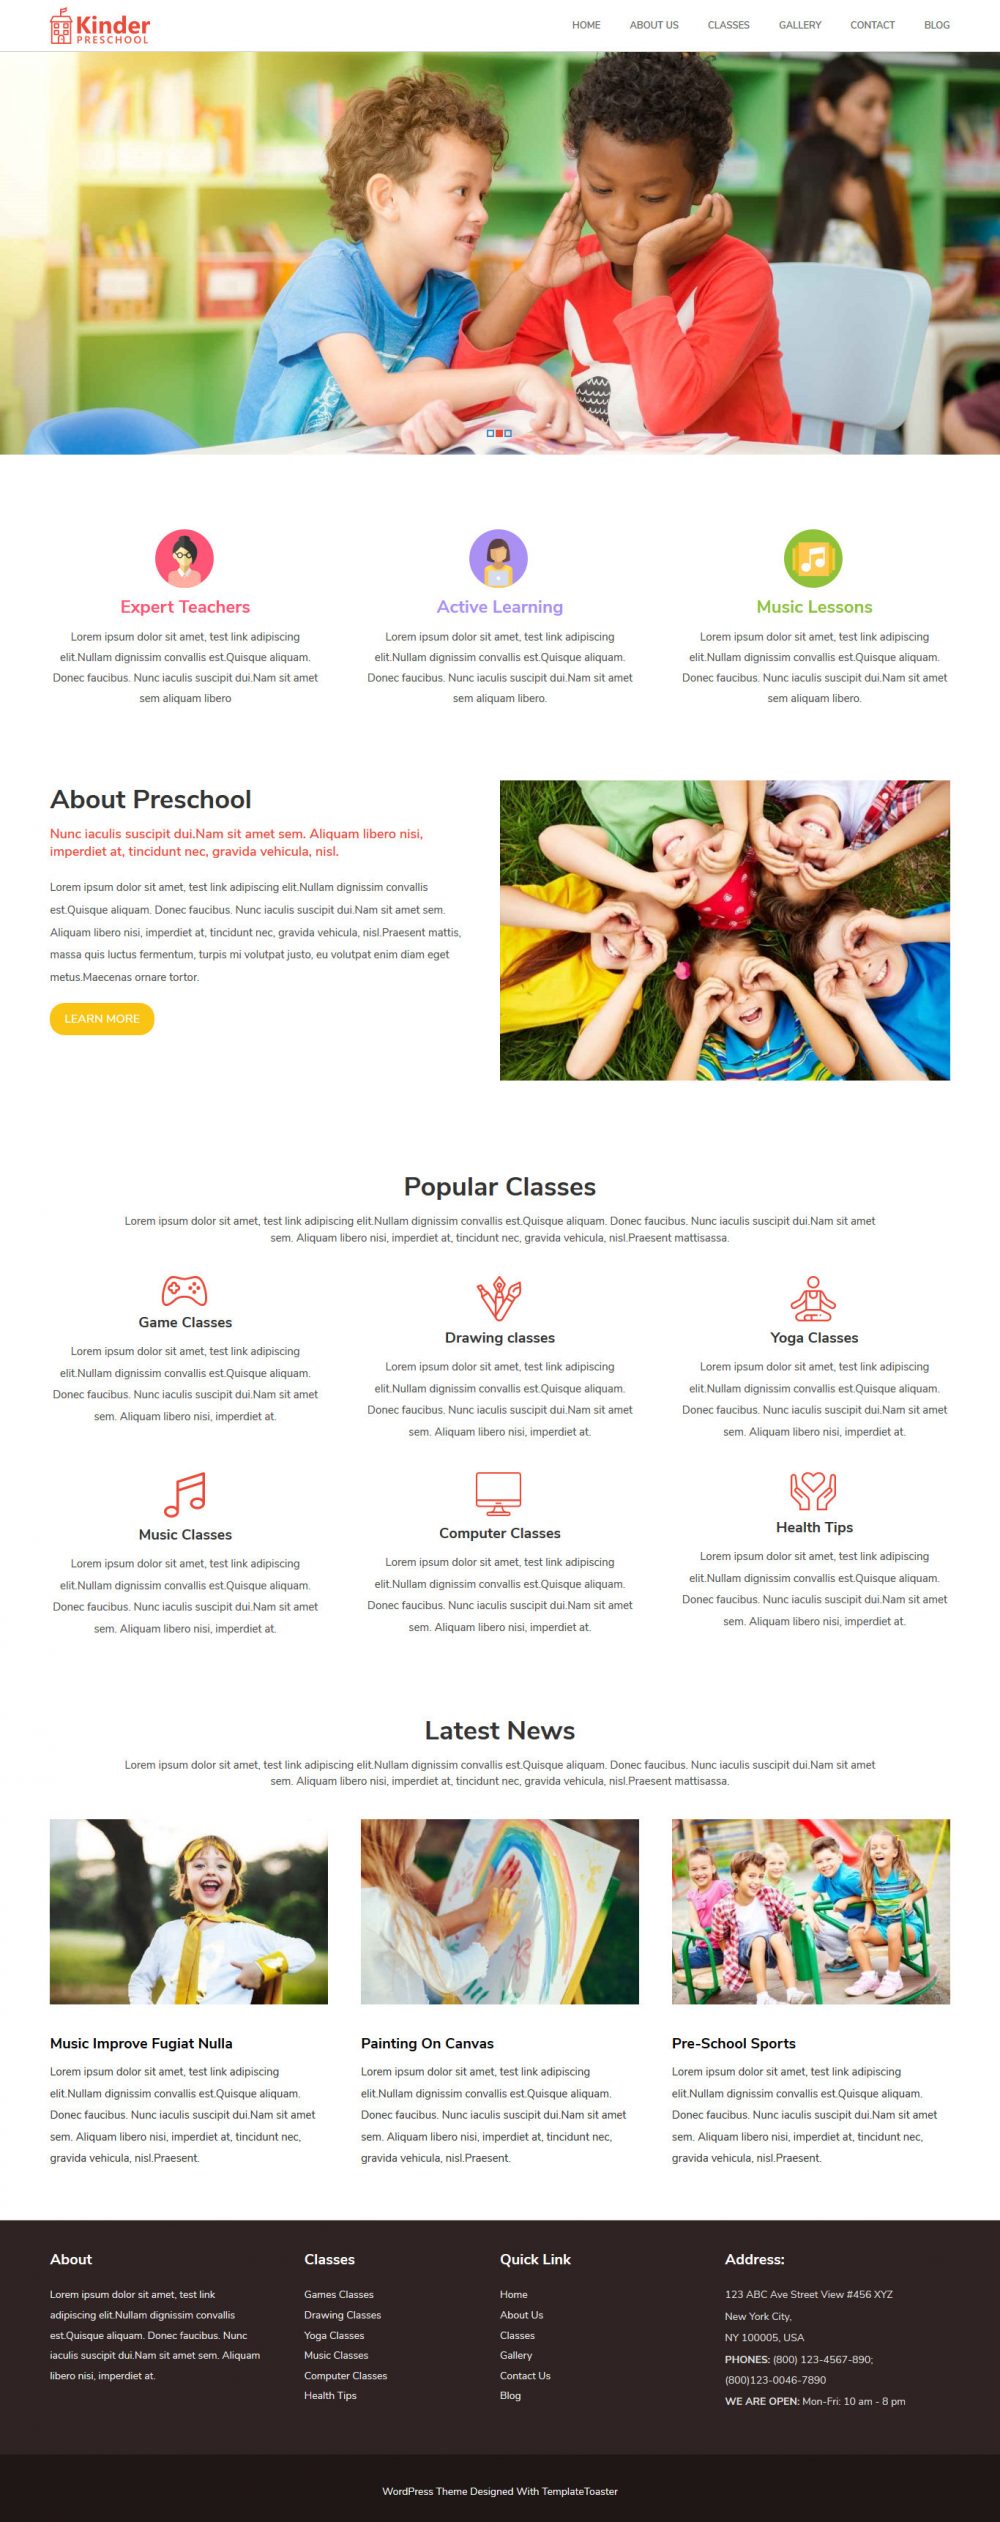 Kinder PreSchool Free WordPress Theme